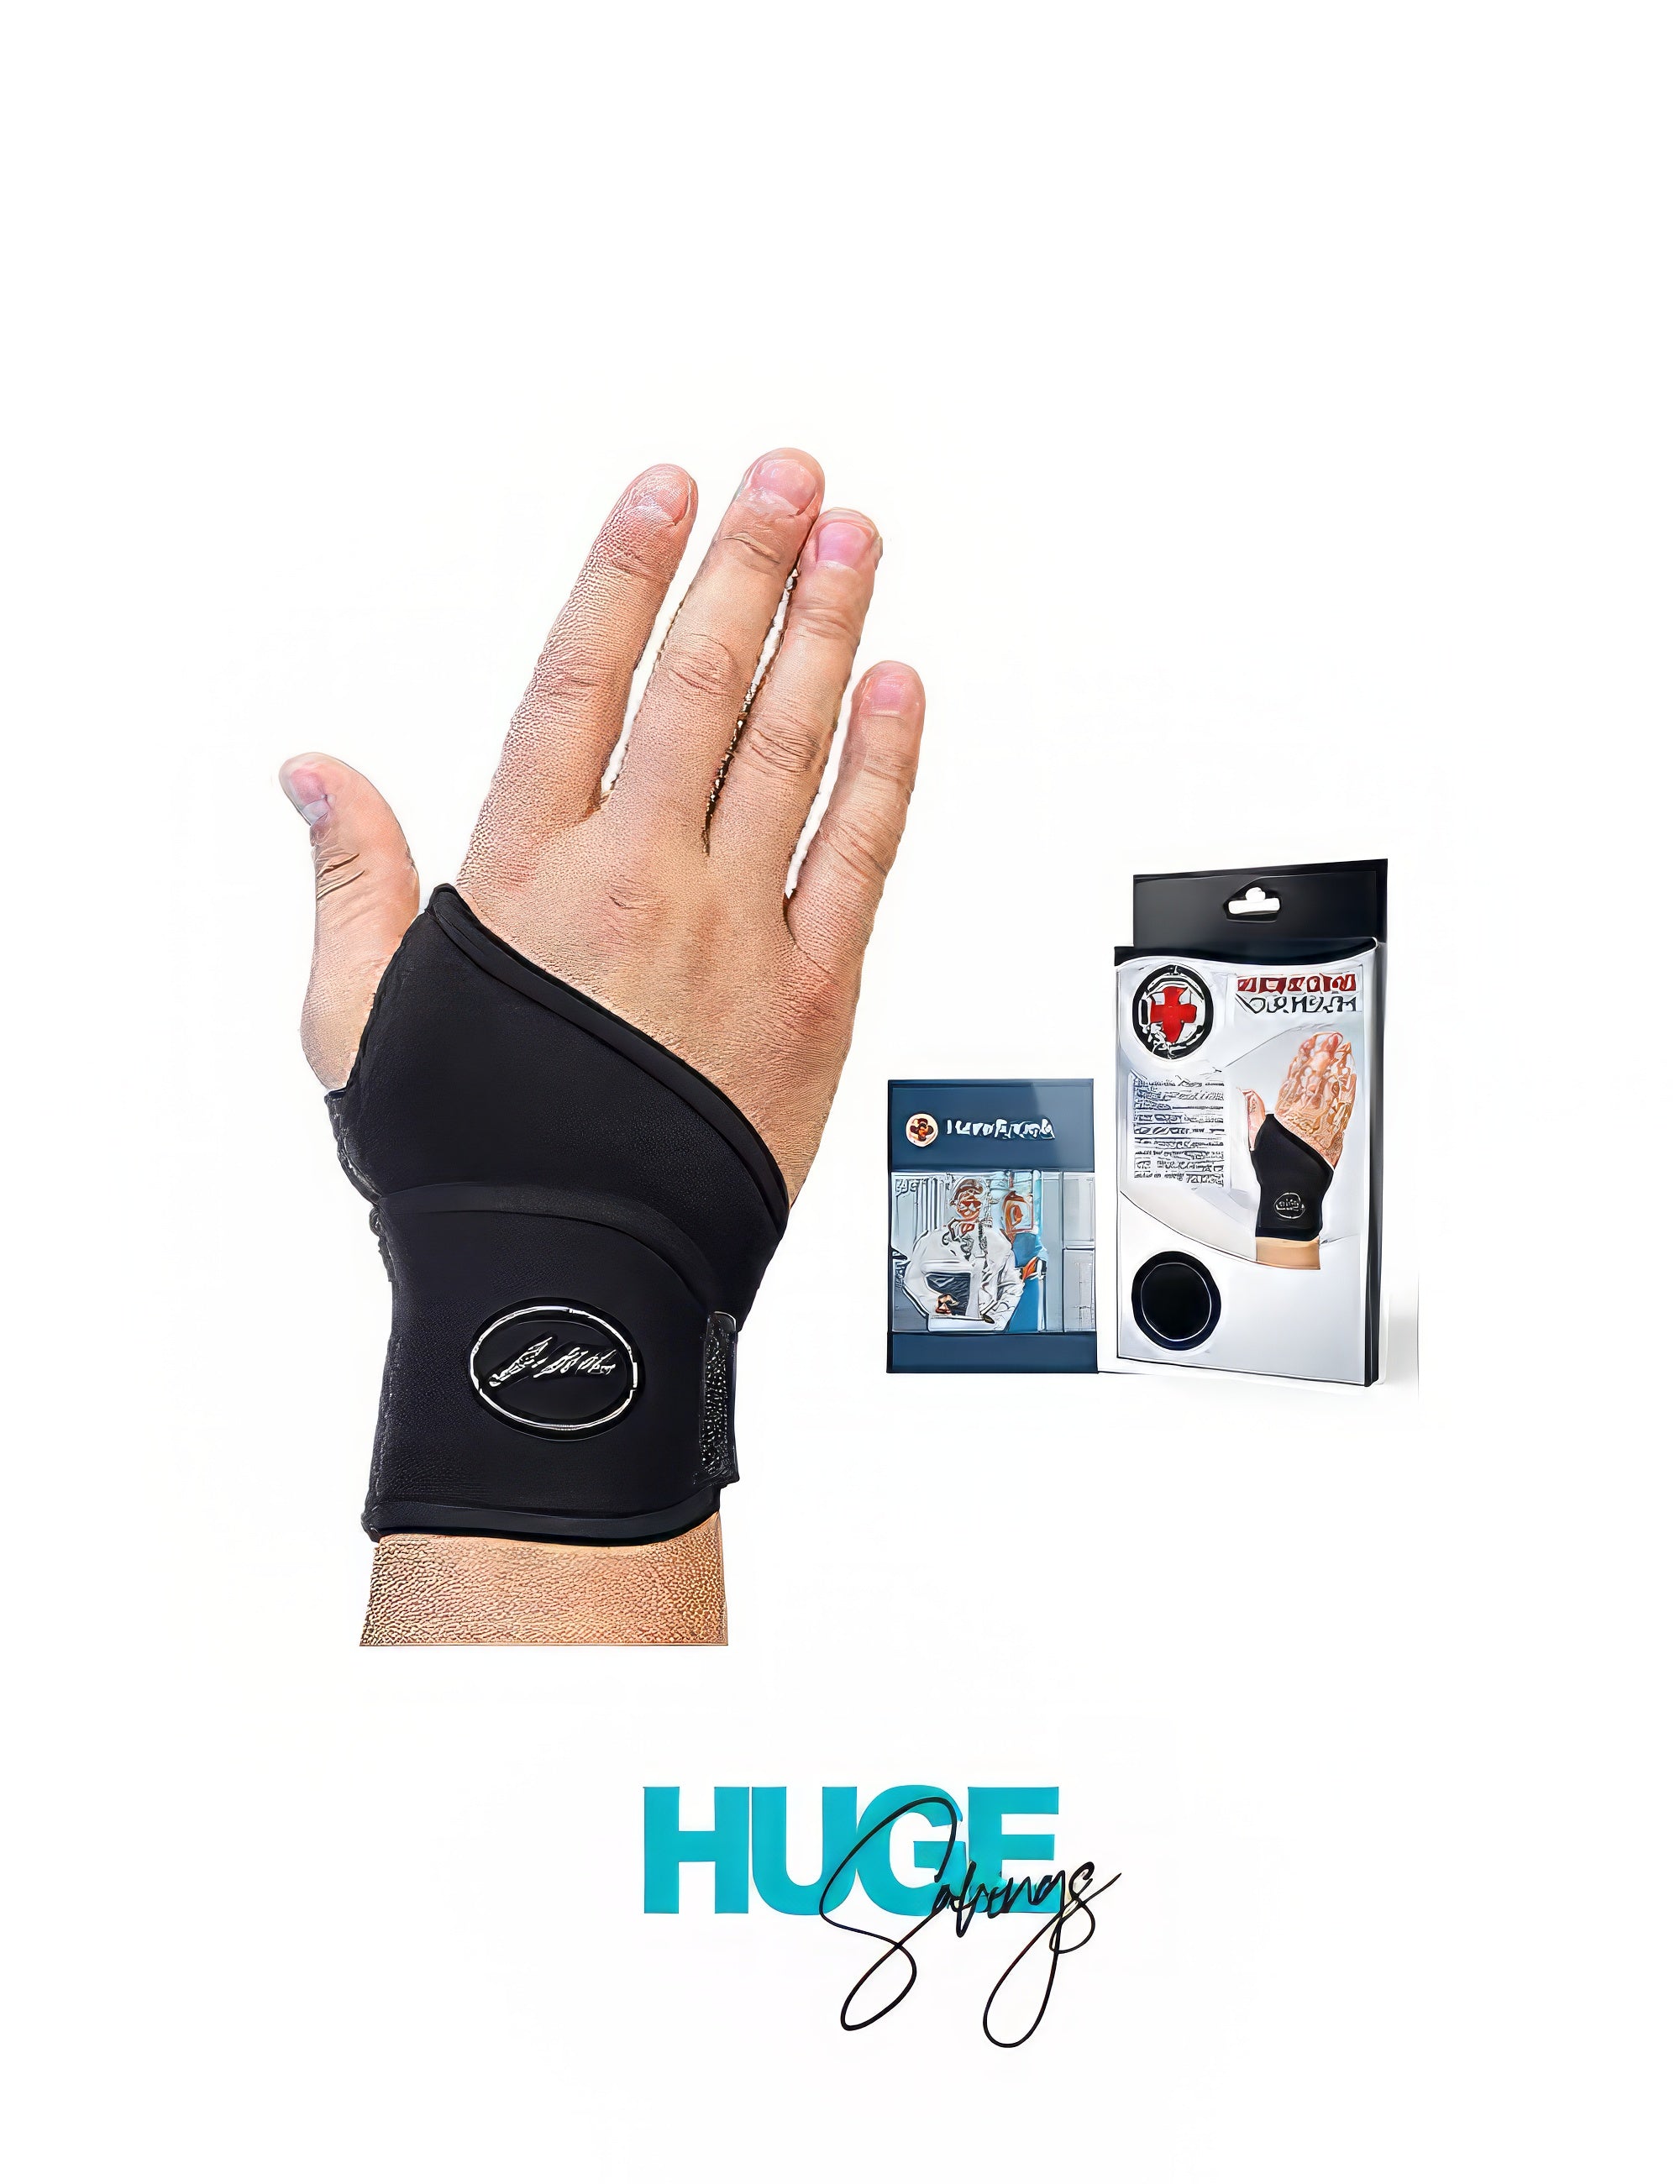 Doctor Developed Premium Copper Lined Wrist Support Relieve Wrist Injuries, Arthritis, Sprains